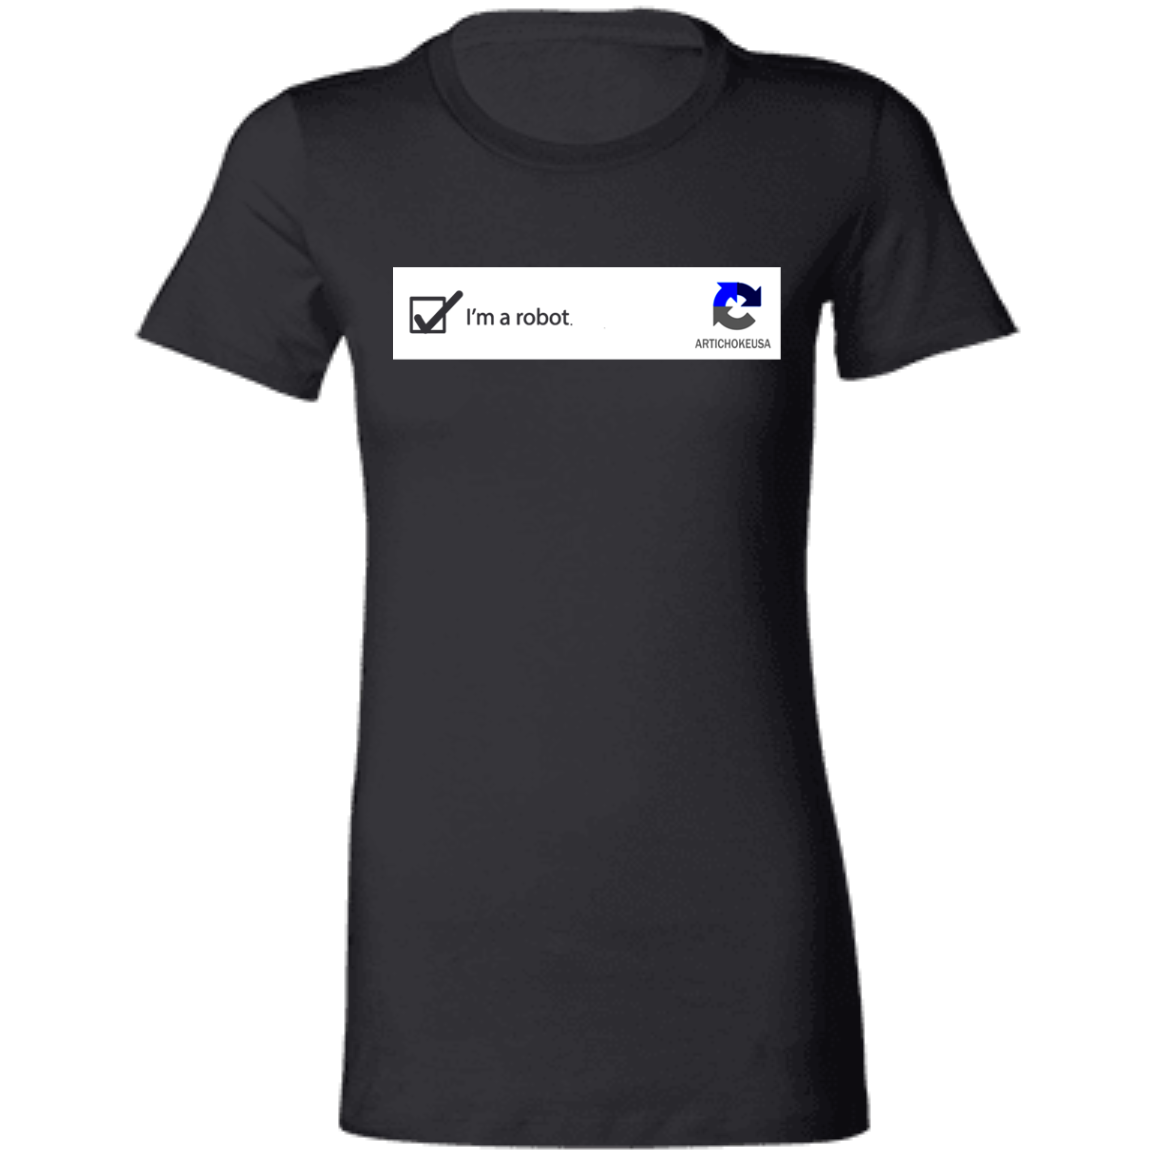 ArtichokeUSA Custom Design. I am a robot. Ladies' Favorite T-Shirt